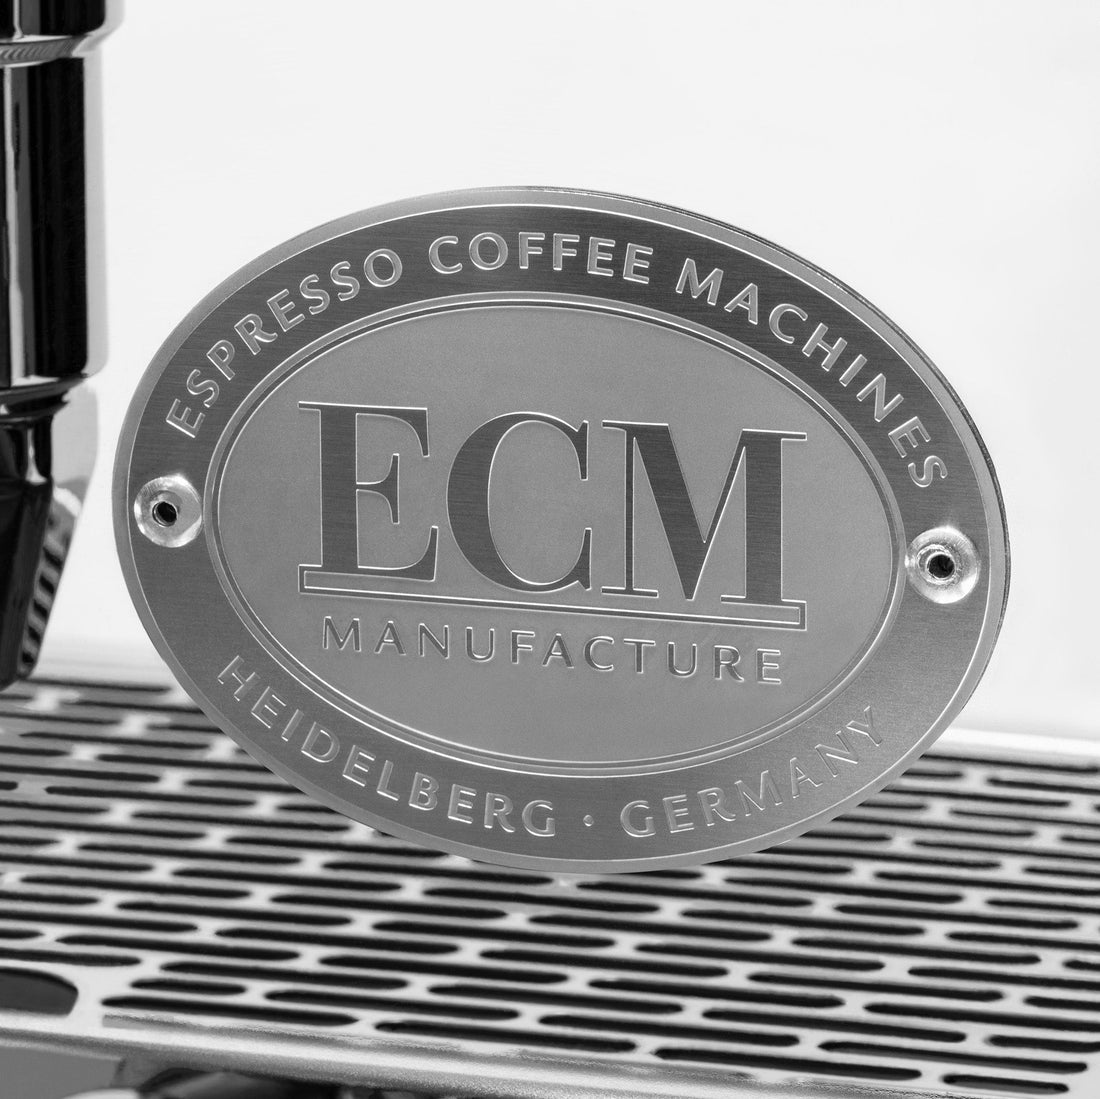 ECM Mechanika Max Espresso Machine